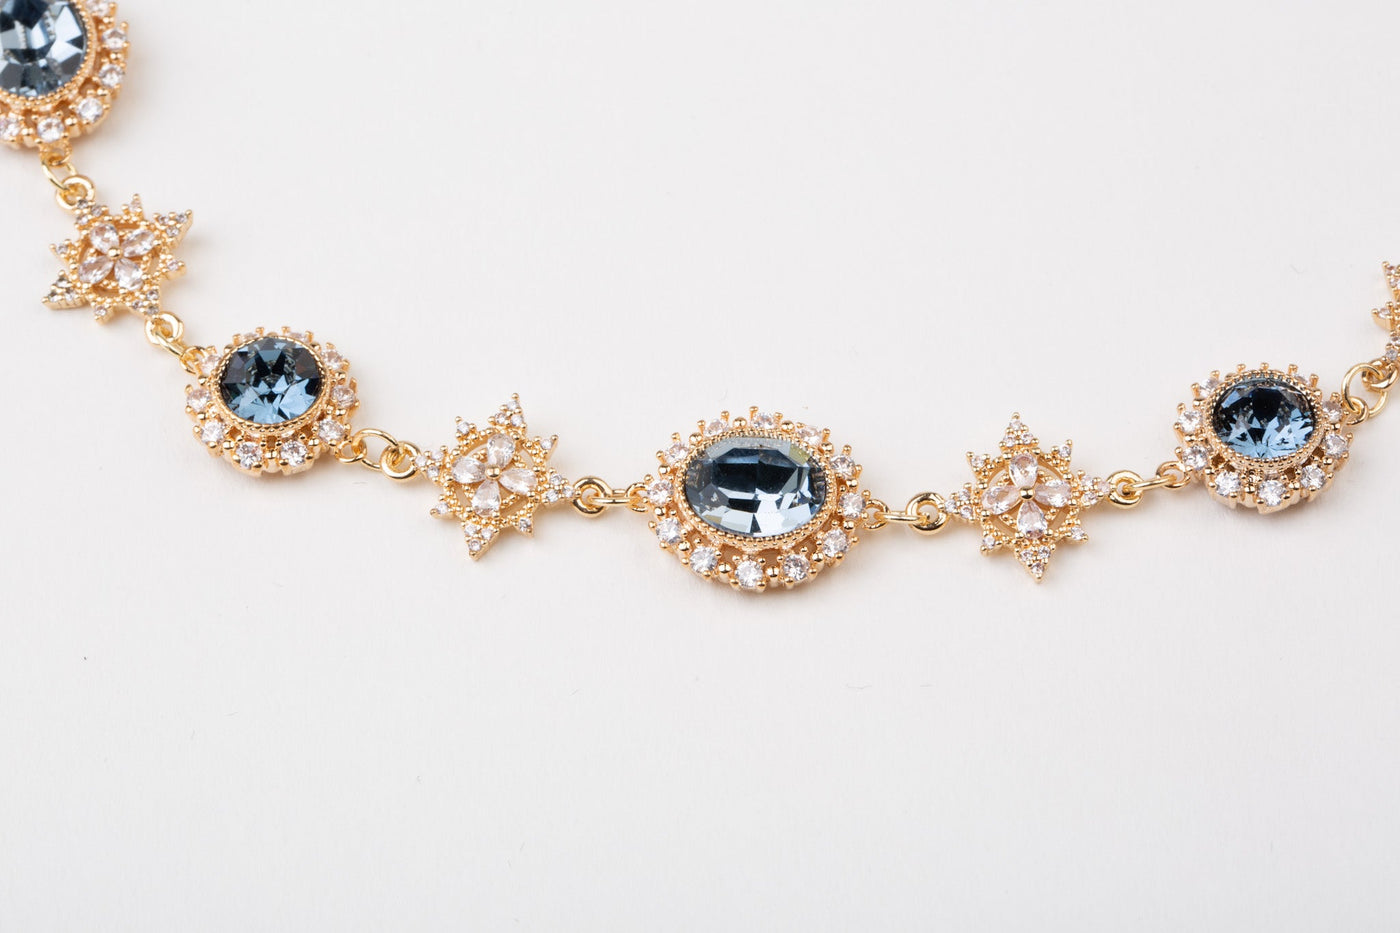 Handmade Vintage Baroque Blue Gemstones Necklace Earrings - Precious Stone Crystal Pearl for Women Regency Era Style - French Lolita Jewelry - WonderlandByLilian